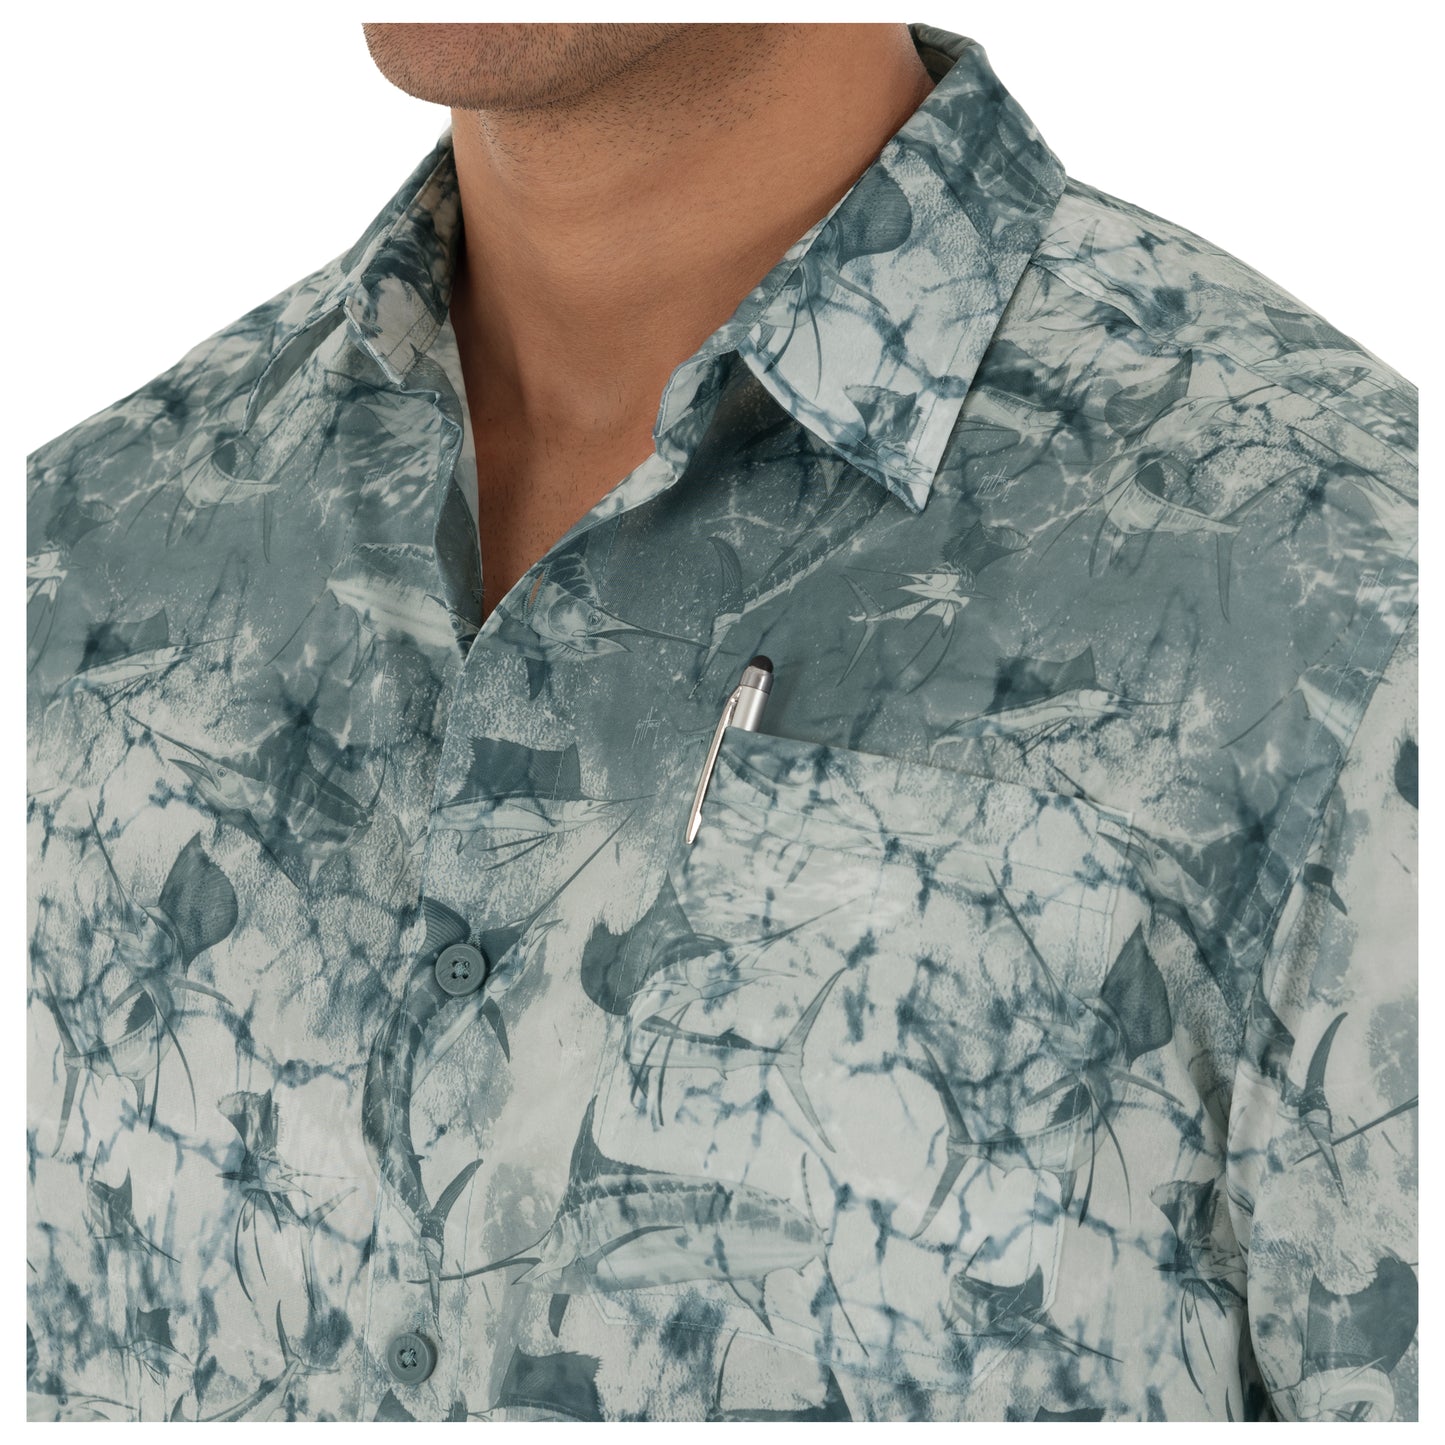 Men's Short Sleeve Printed Grey Fishing Shirt